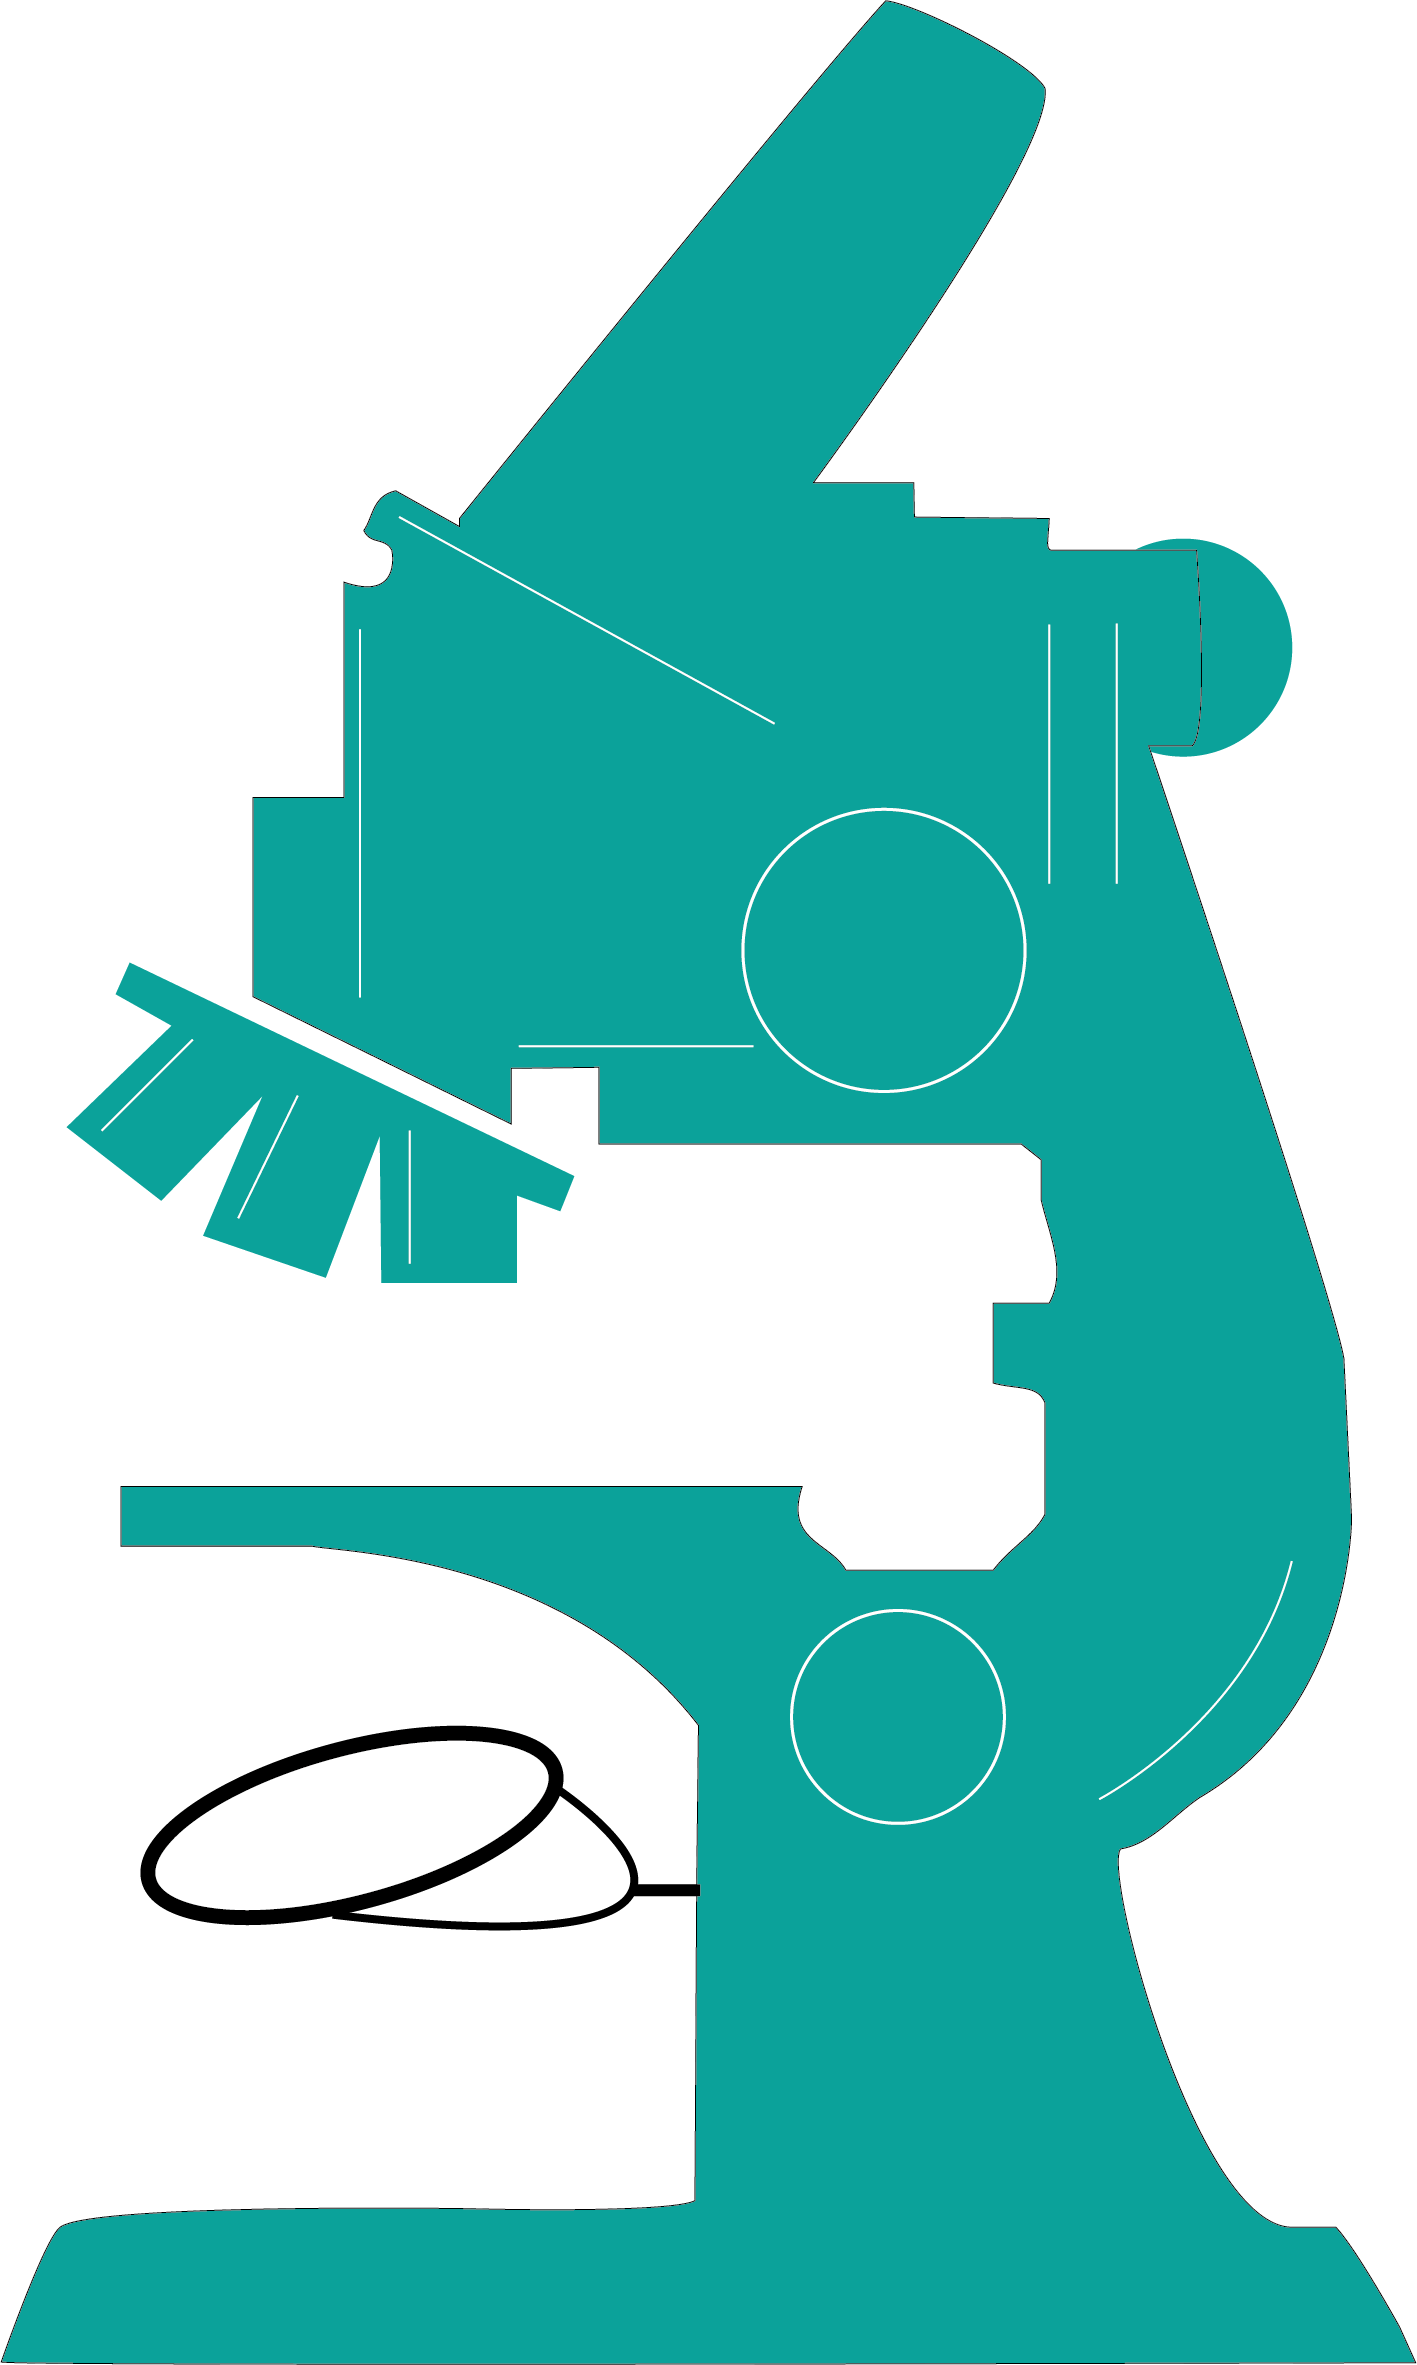 microscope clipart microscope drawing